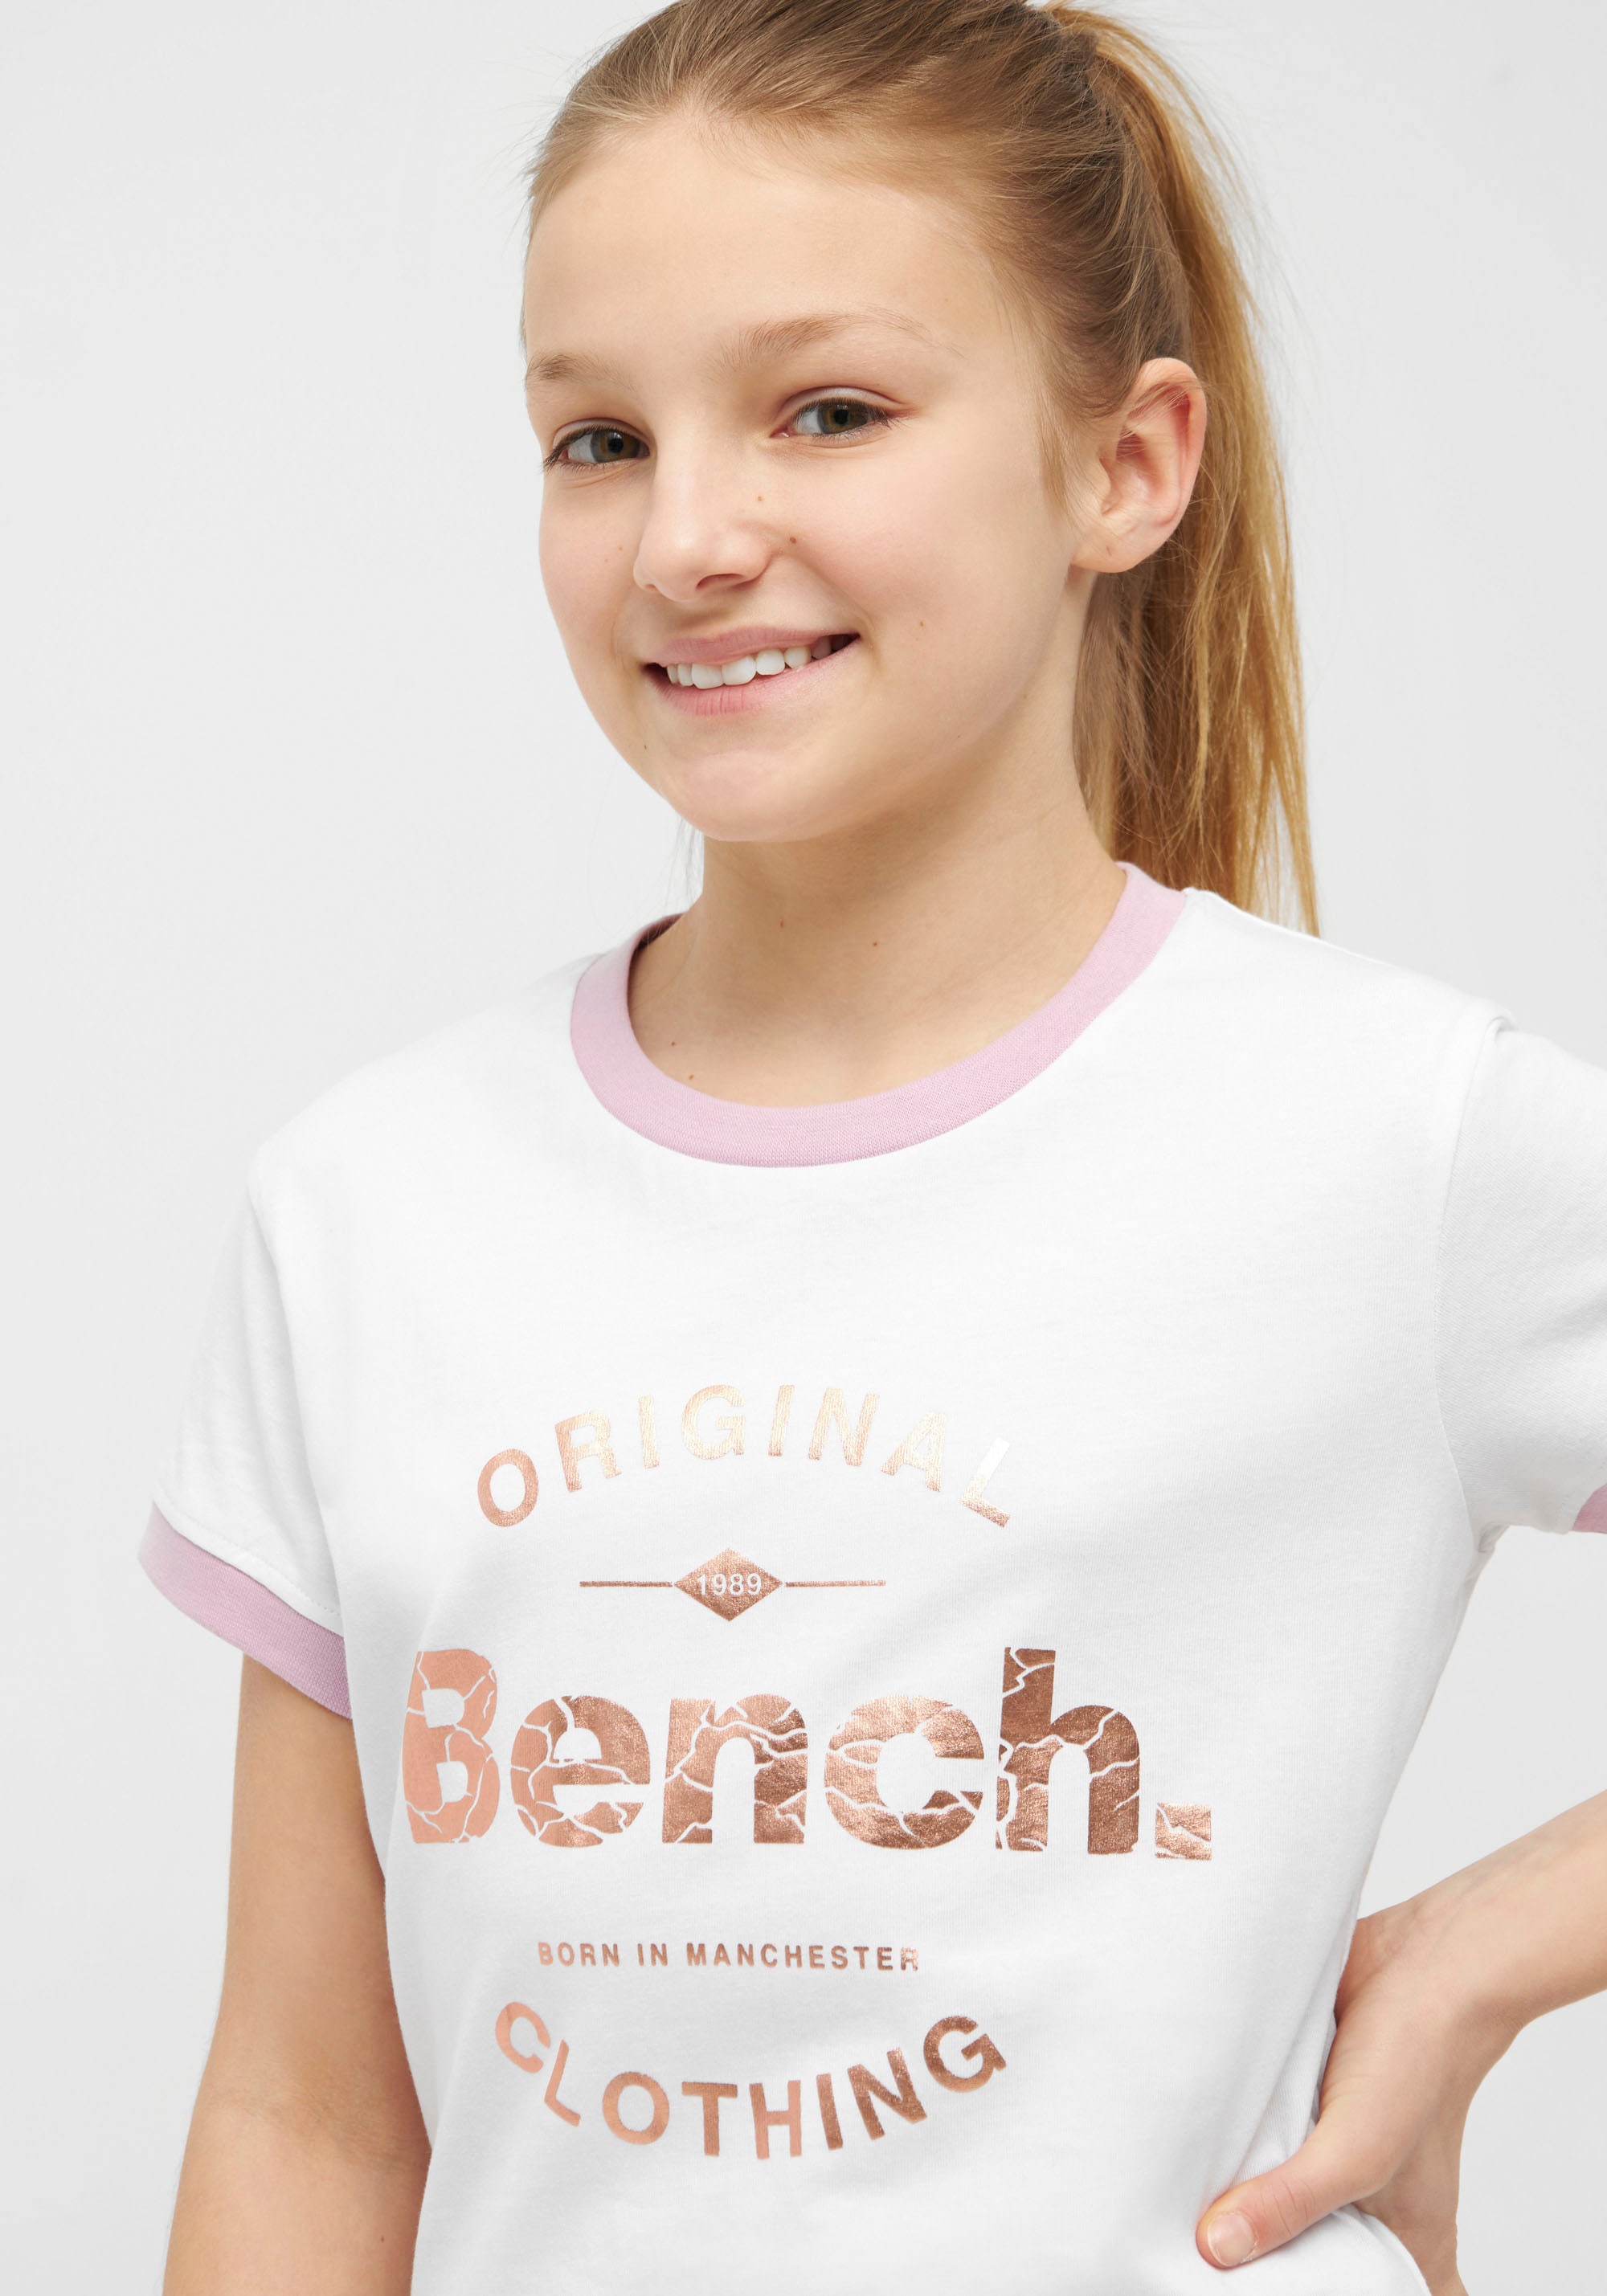 Bench. T-Shirt »SPARKY«